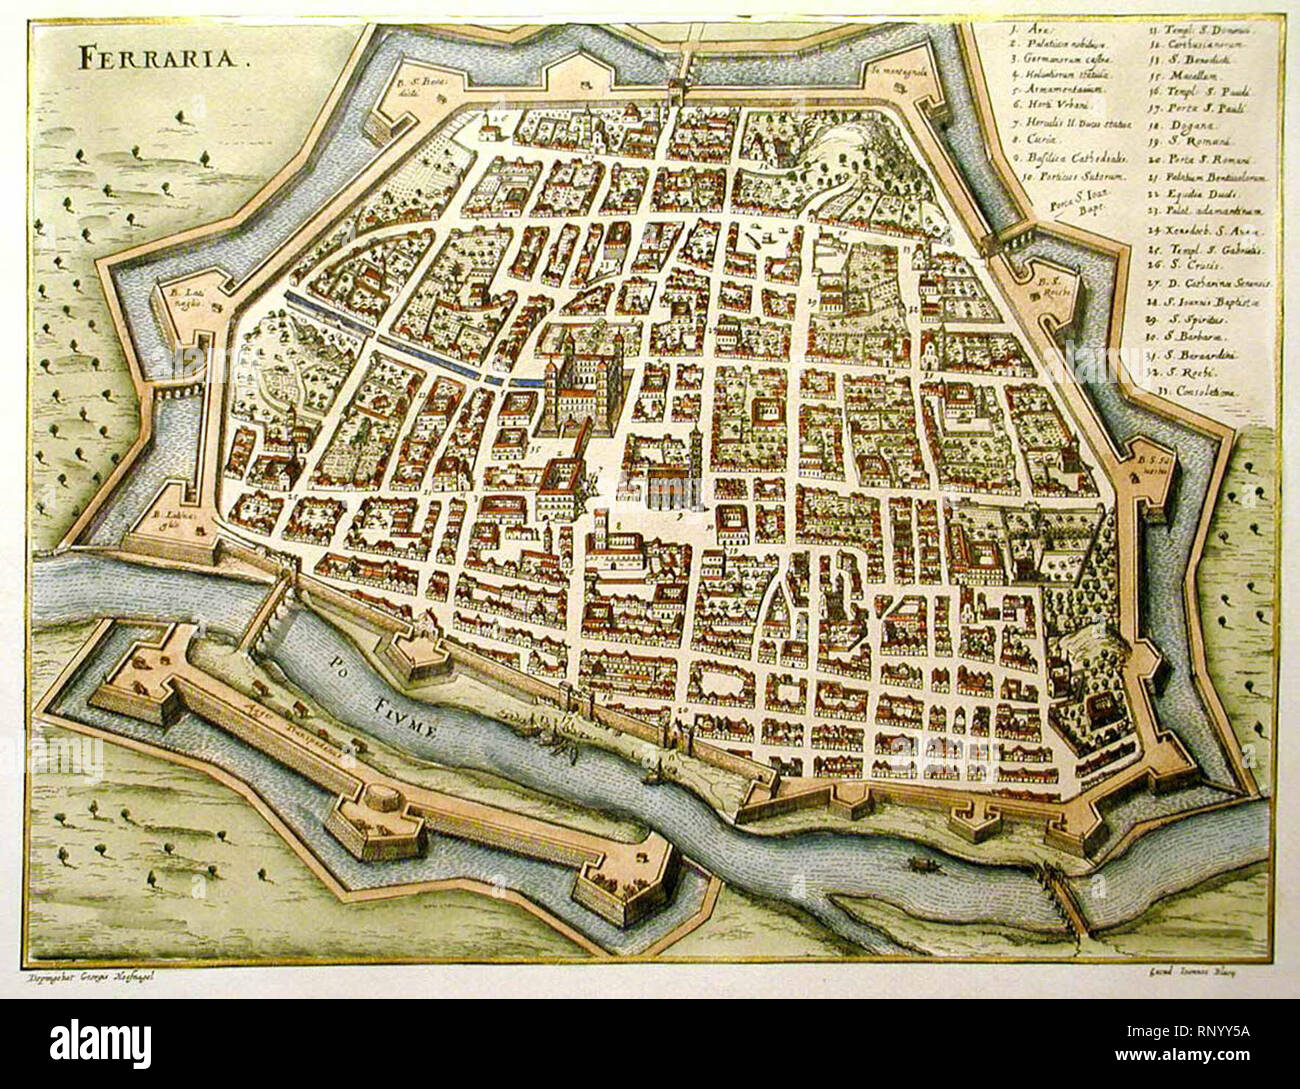 A map of Ferrara, c.1600 Stock Photo - Alamy